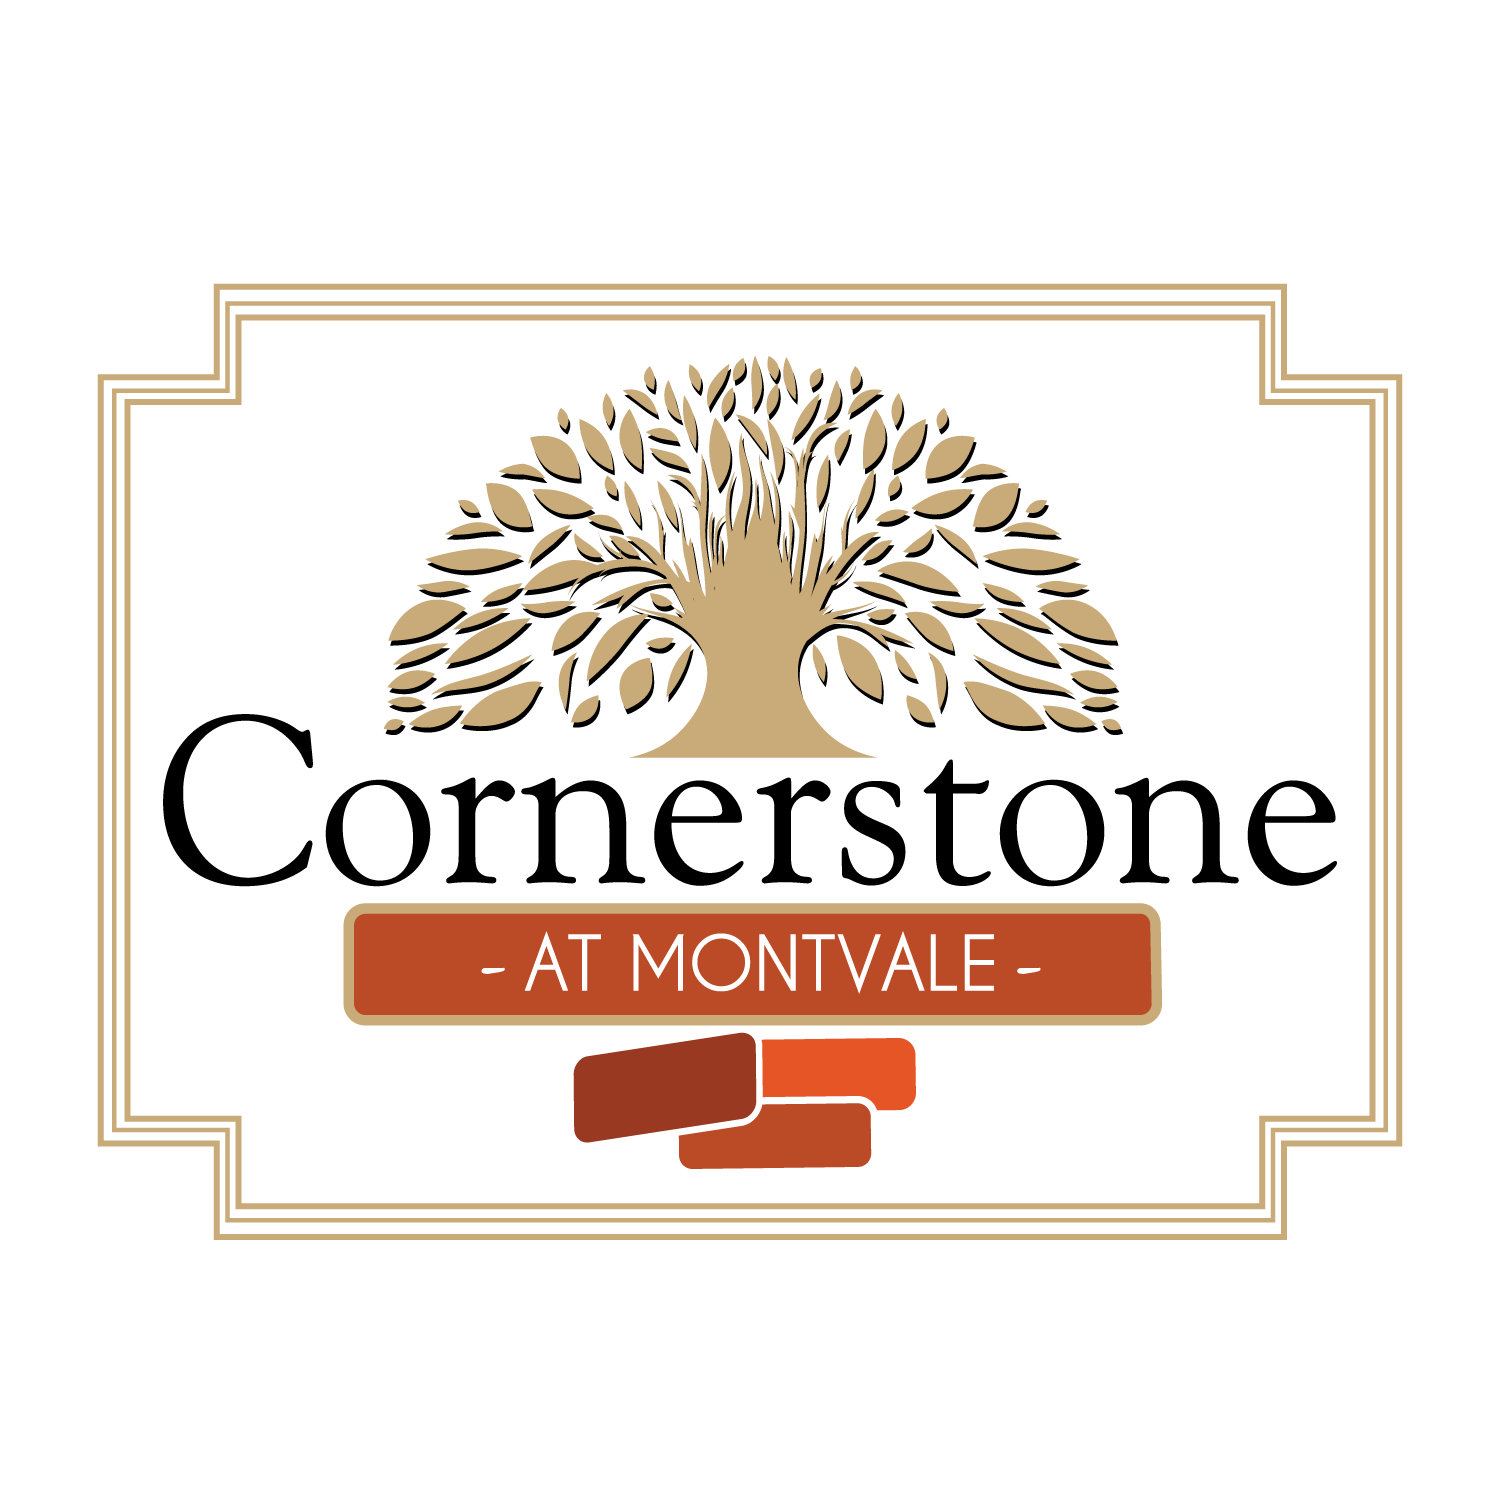 Cornerstone At Montvale